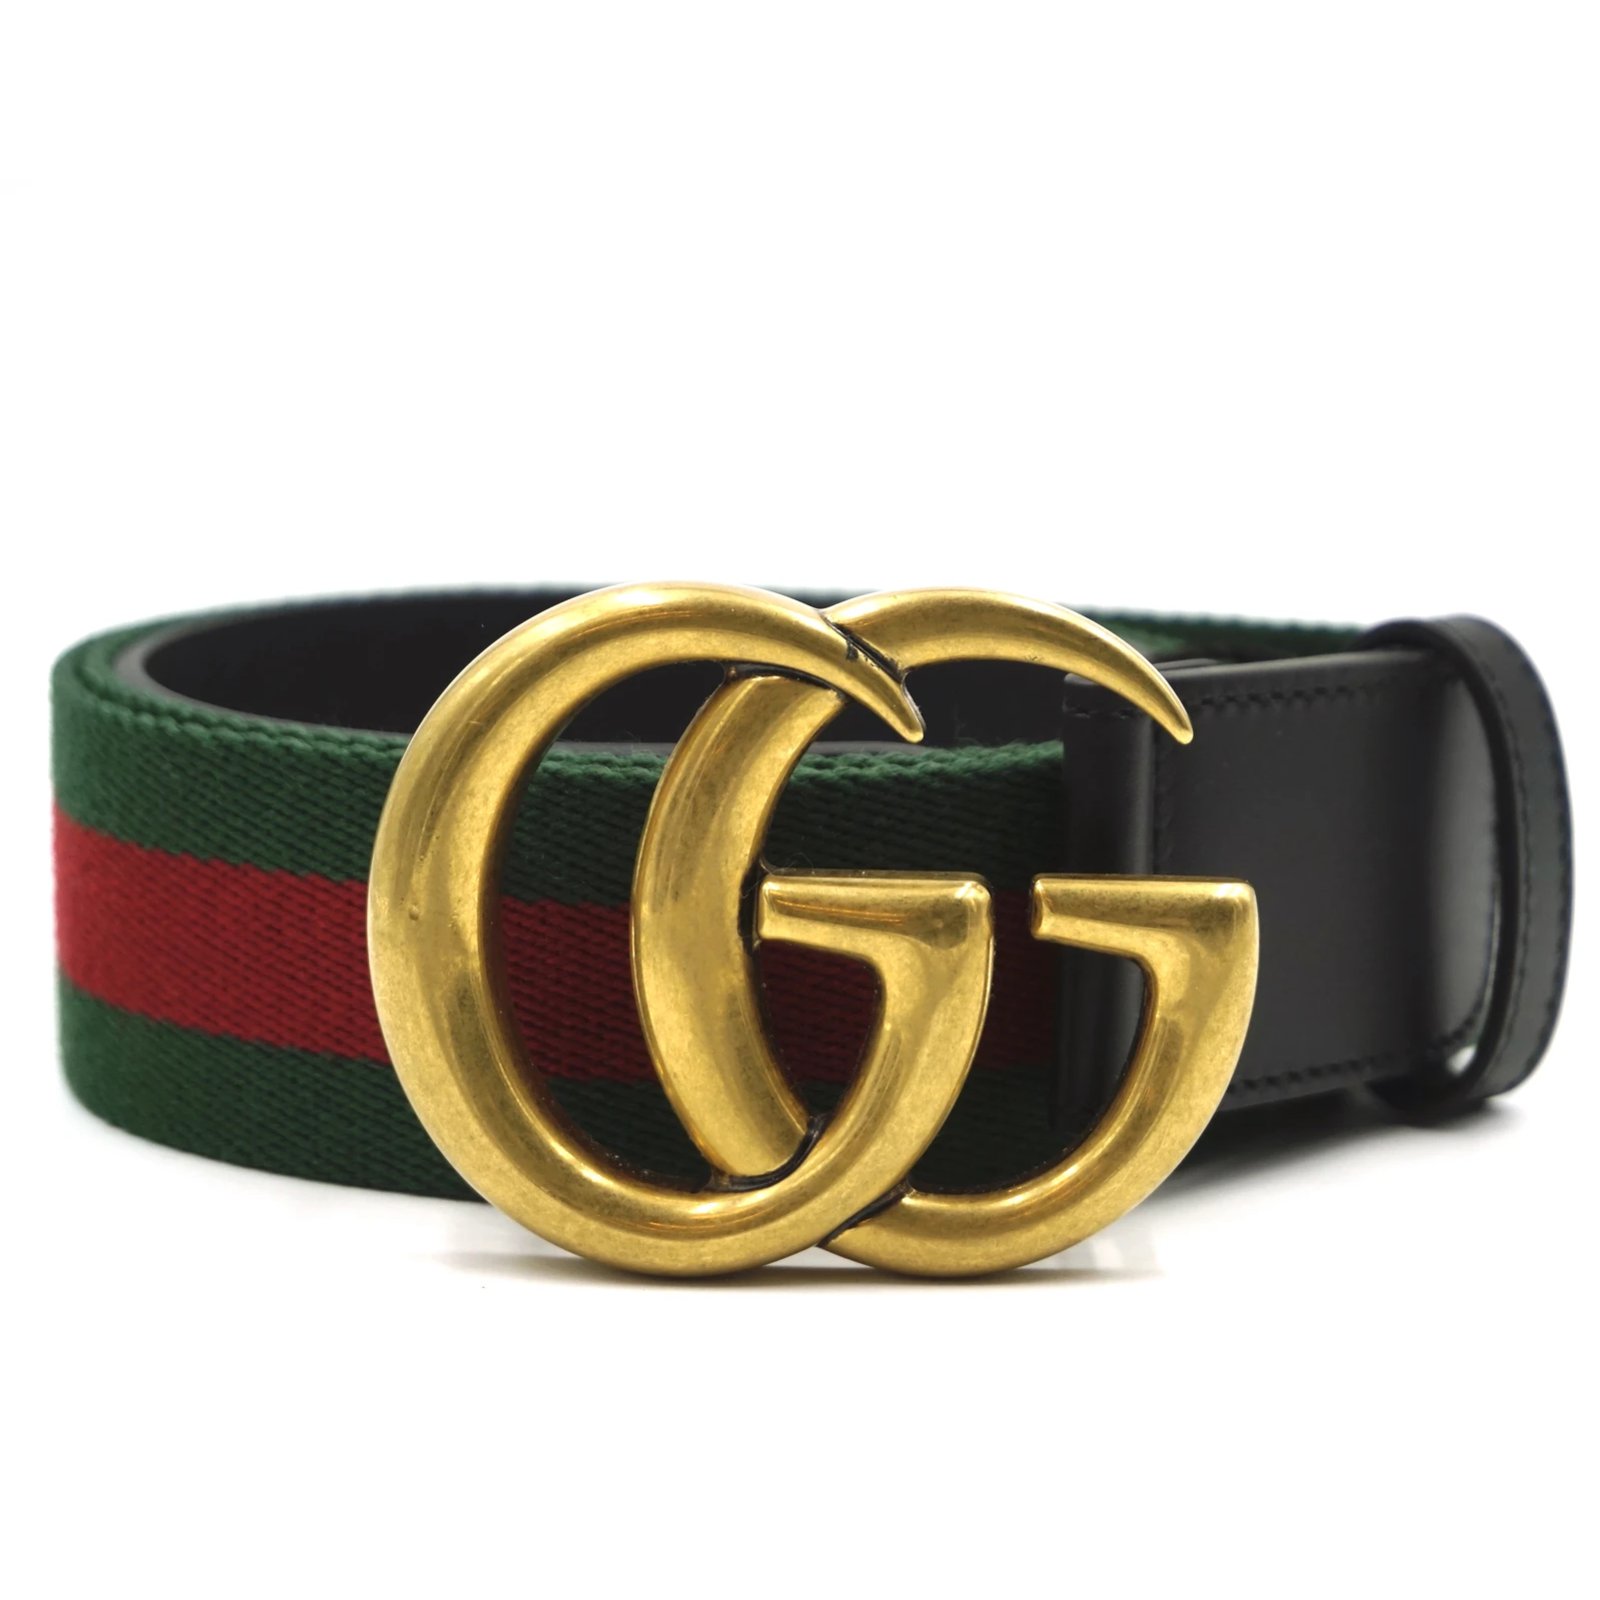 gucci belt size 95 38